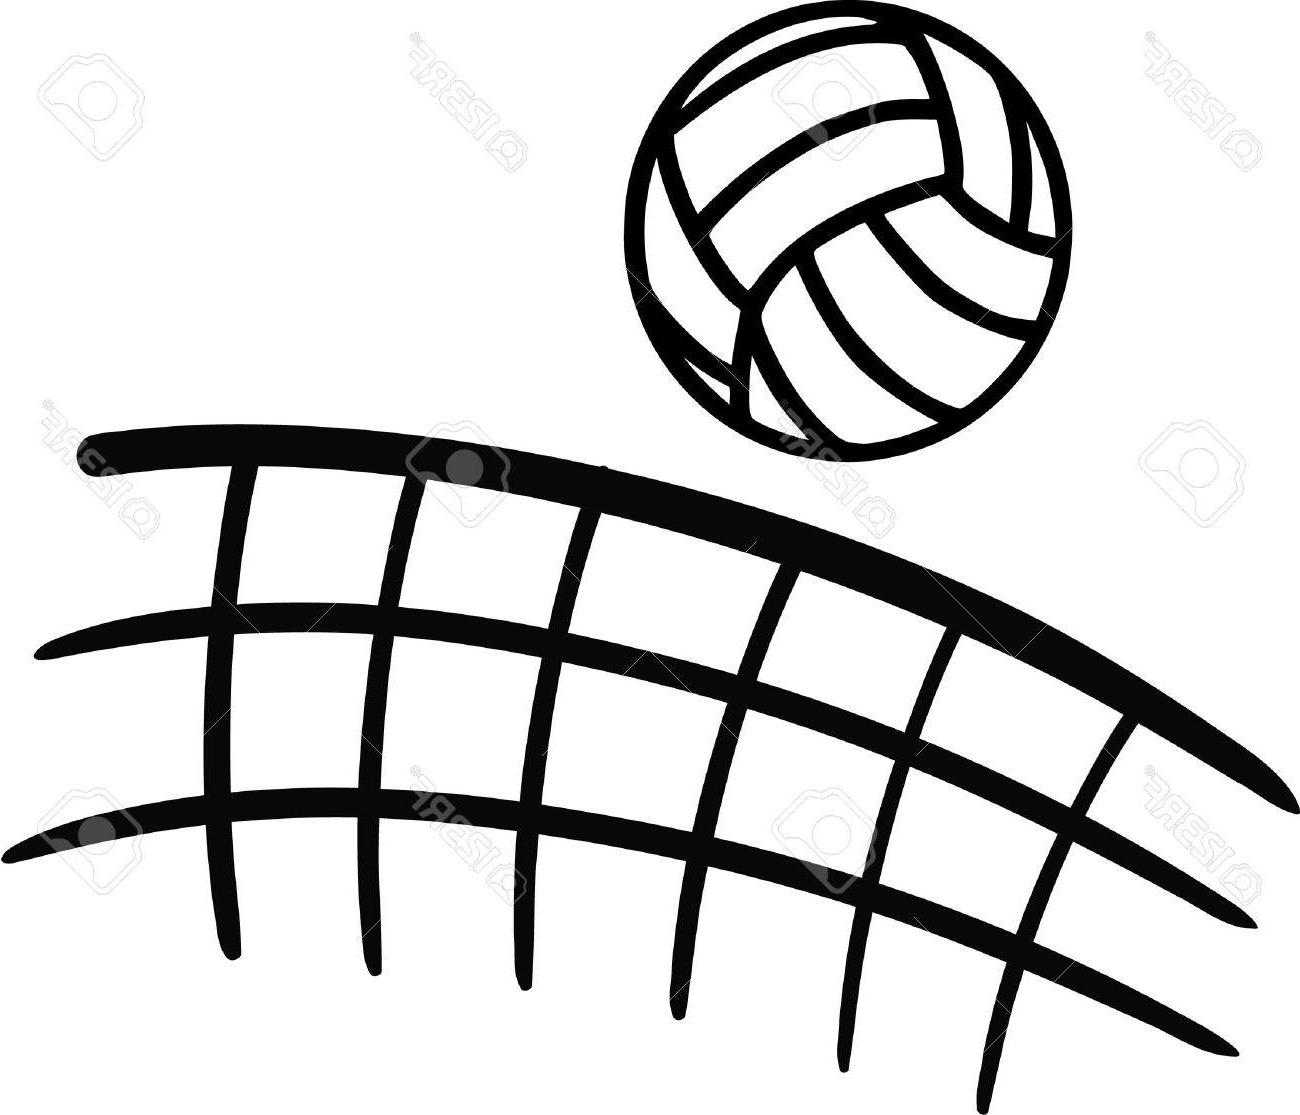 Volleyball net sketch.